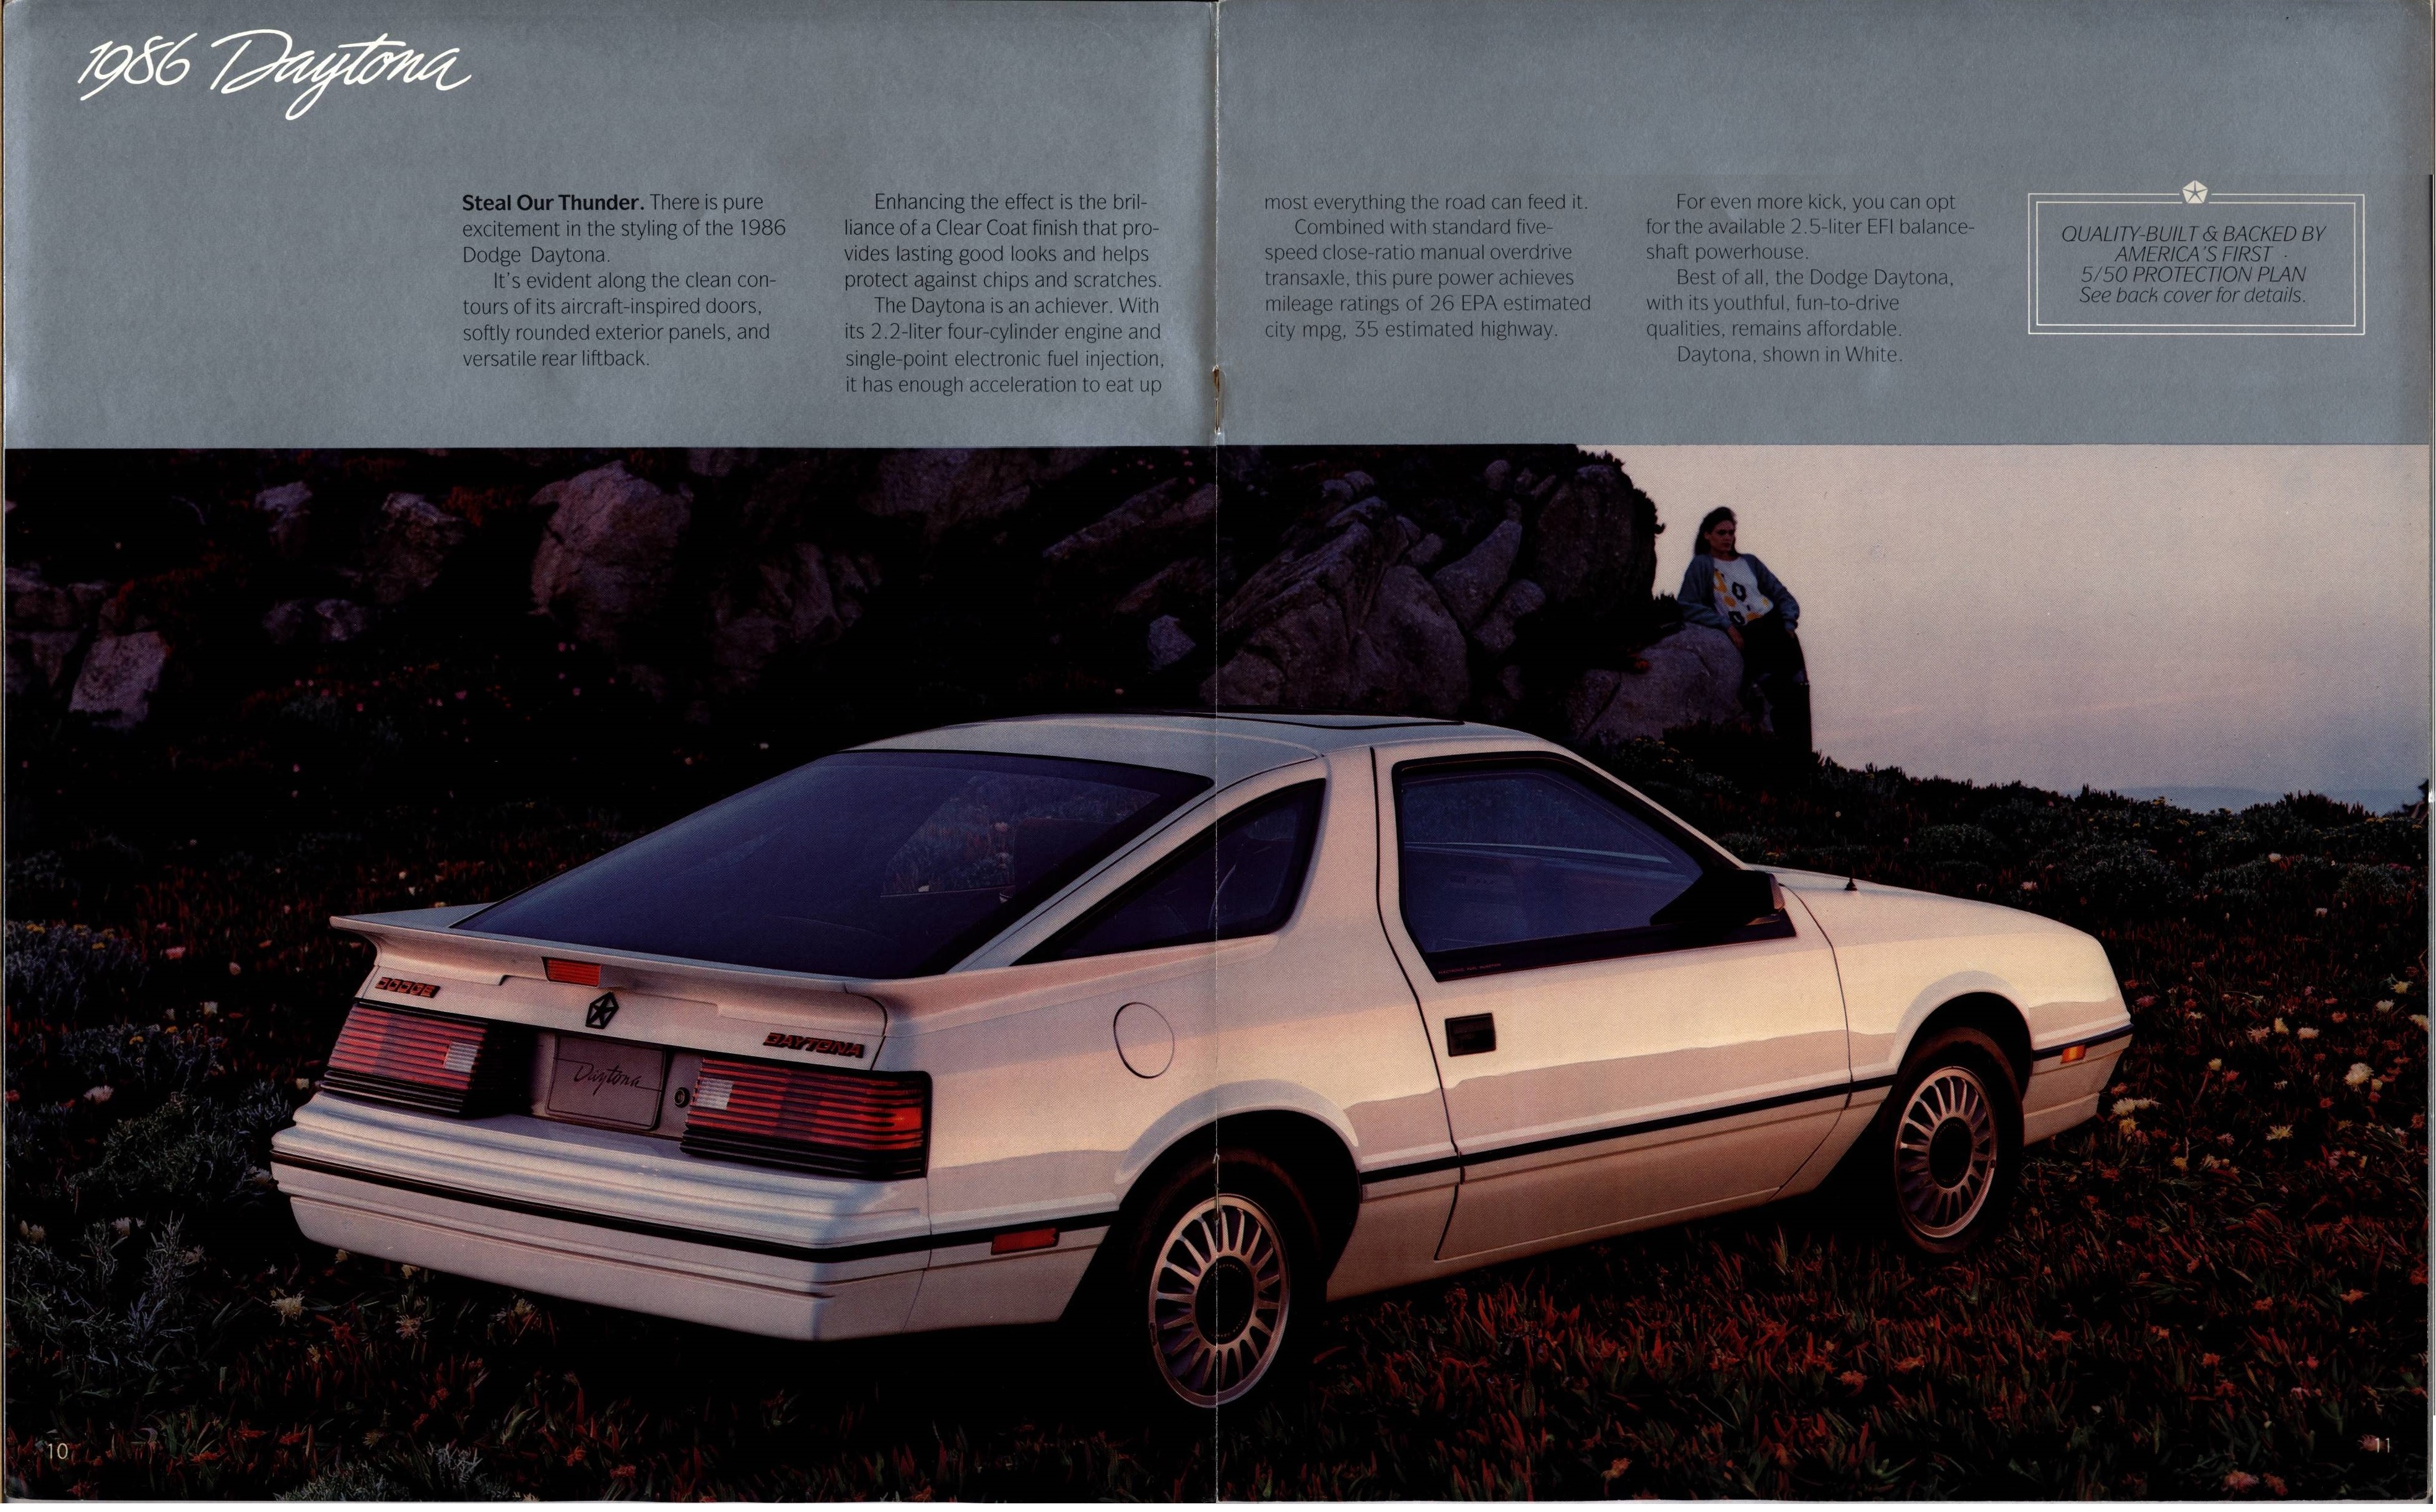 1986 Dodge Daytona Brochure 10-11